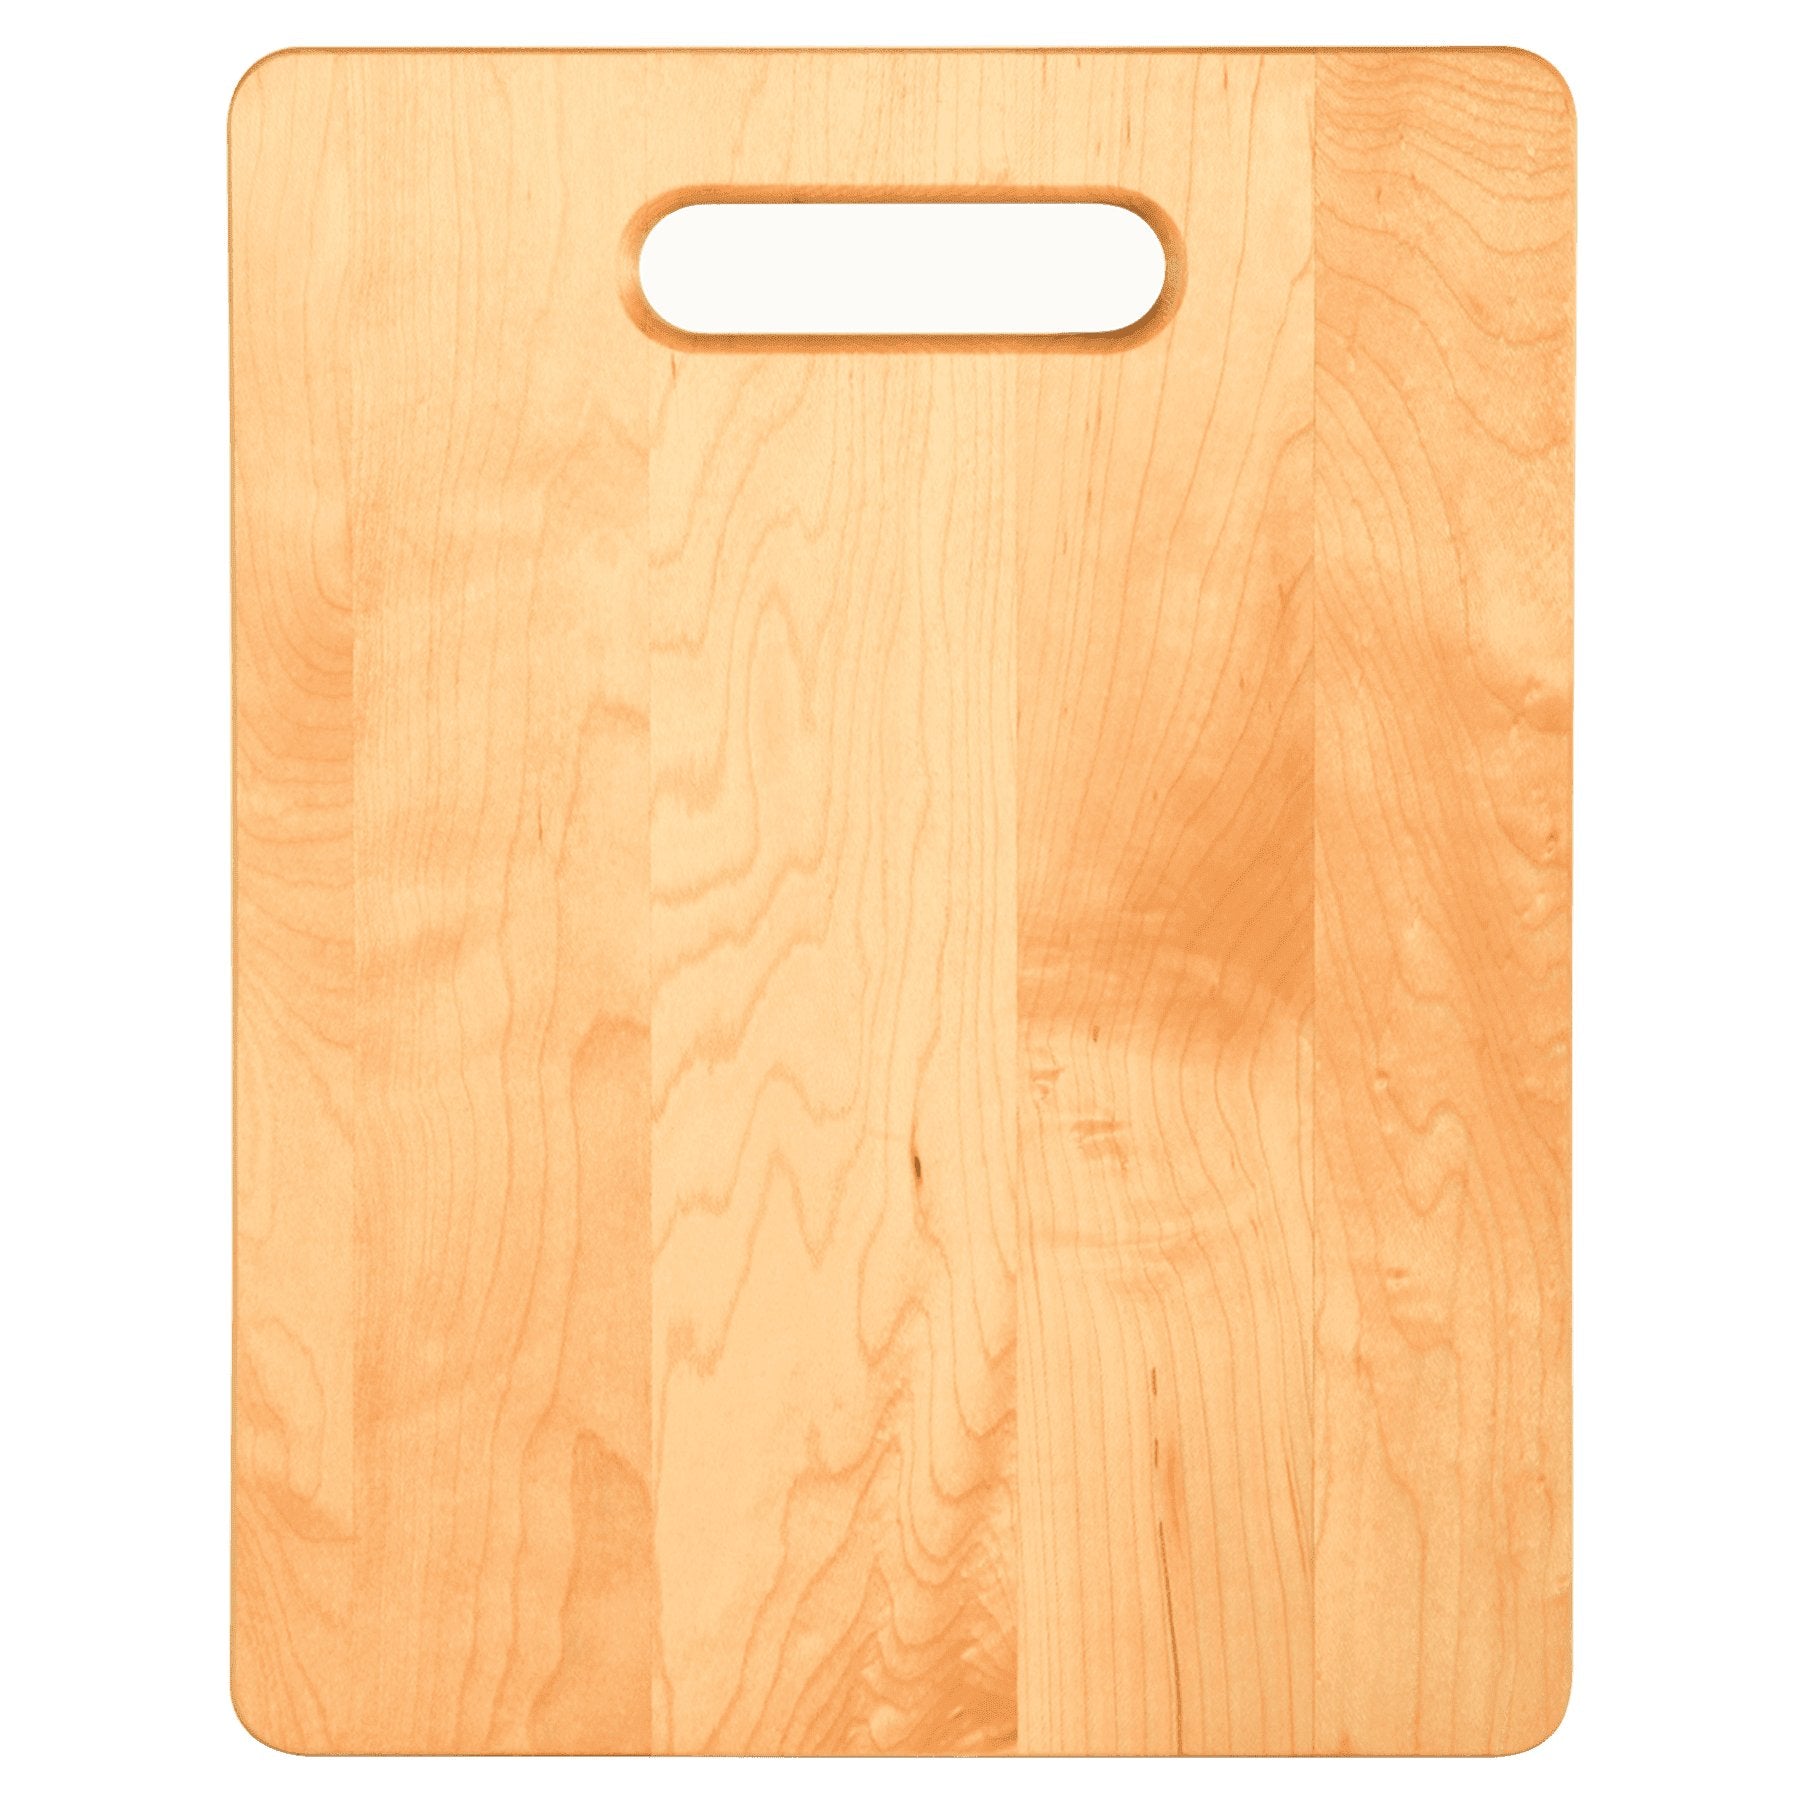 Engravable Maple Cutting Board - Legacy Creator Inc11.5 x 8.75